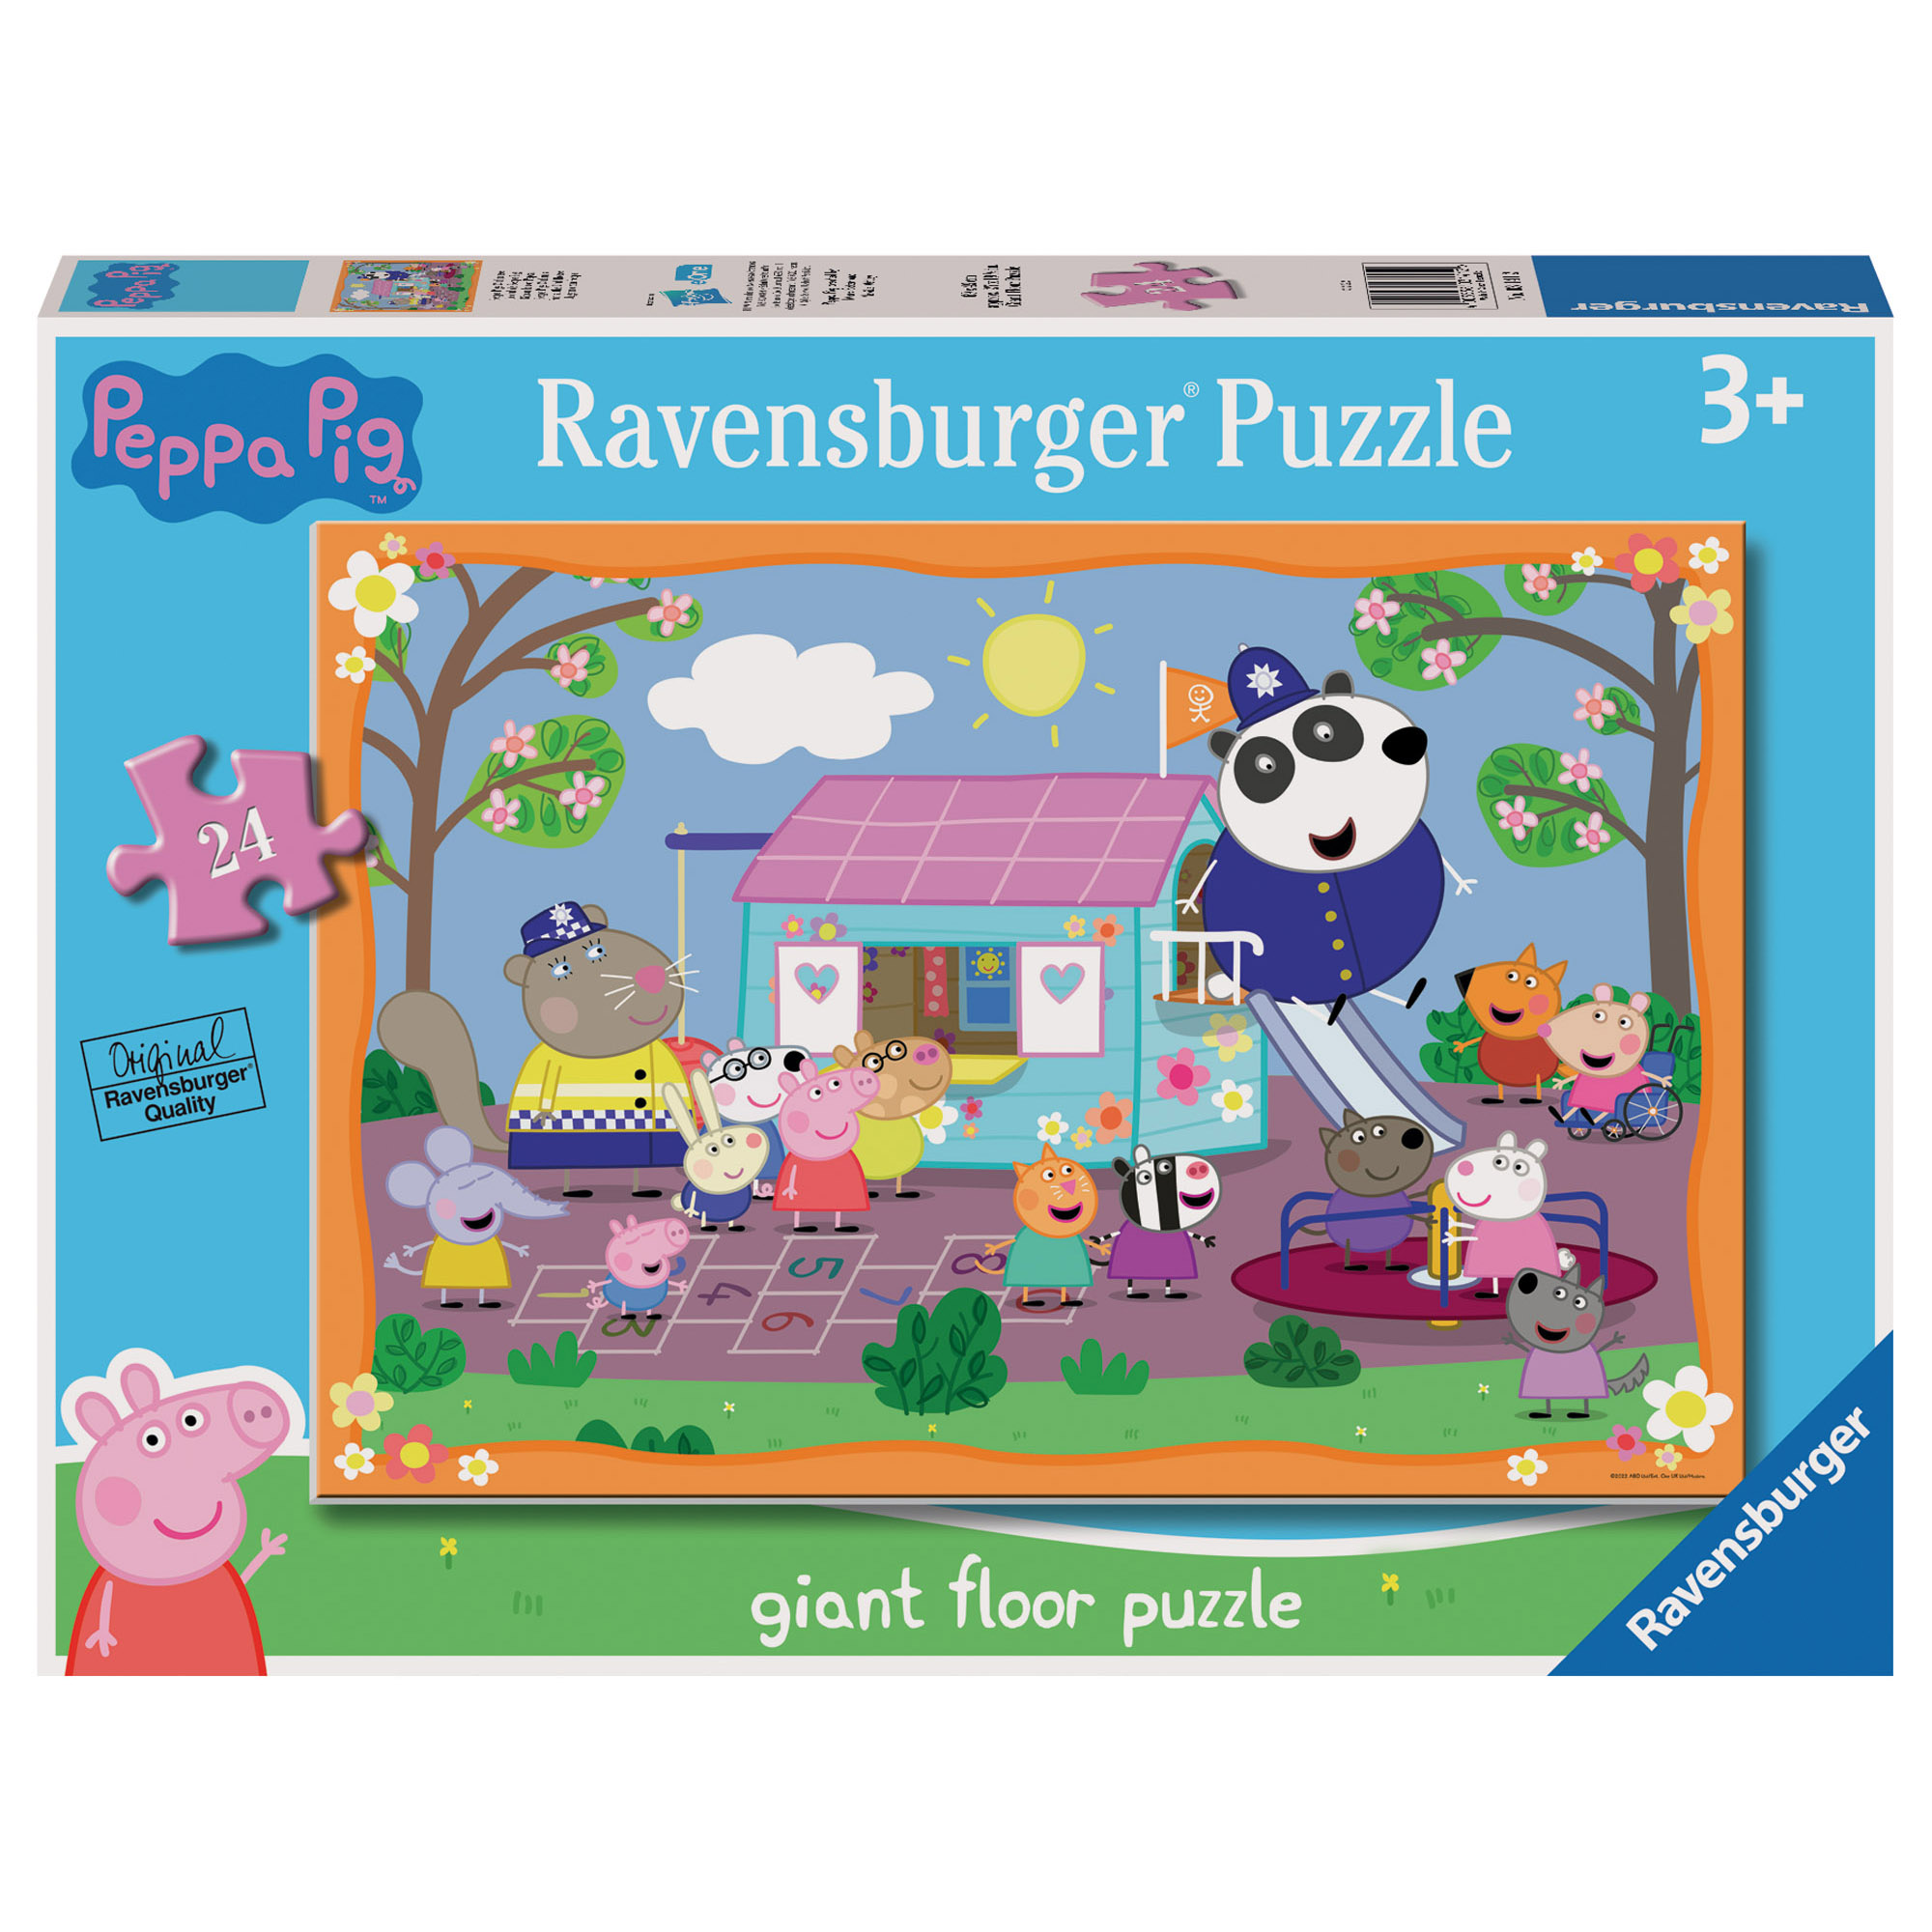 Ravensburger - puzzle peppa pig club house, collezione 24 giant pavimento, 24 pezzi, età raccomandata 3+ anni - PEPPA PIG, RAVENSBURGER